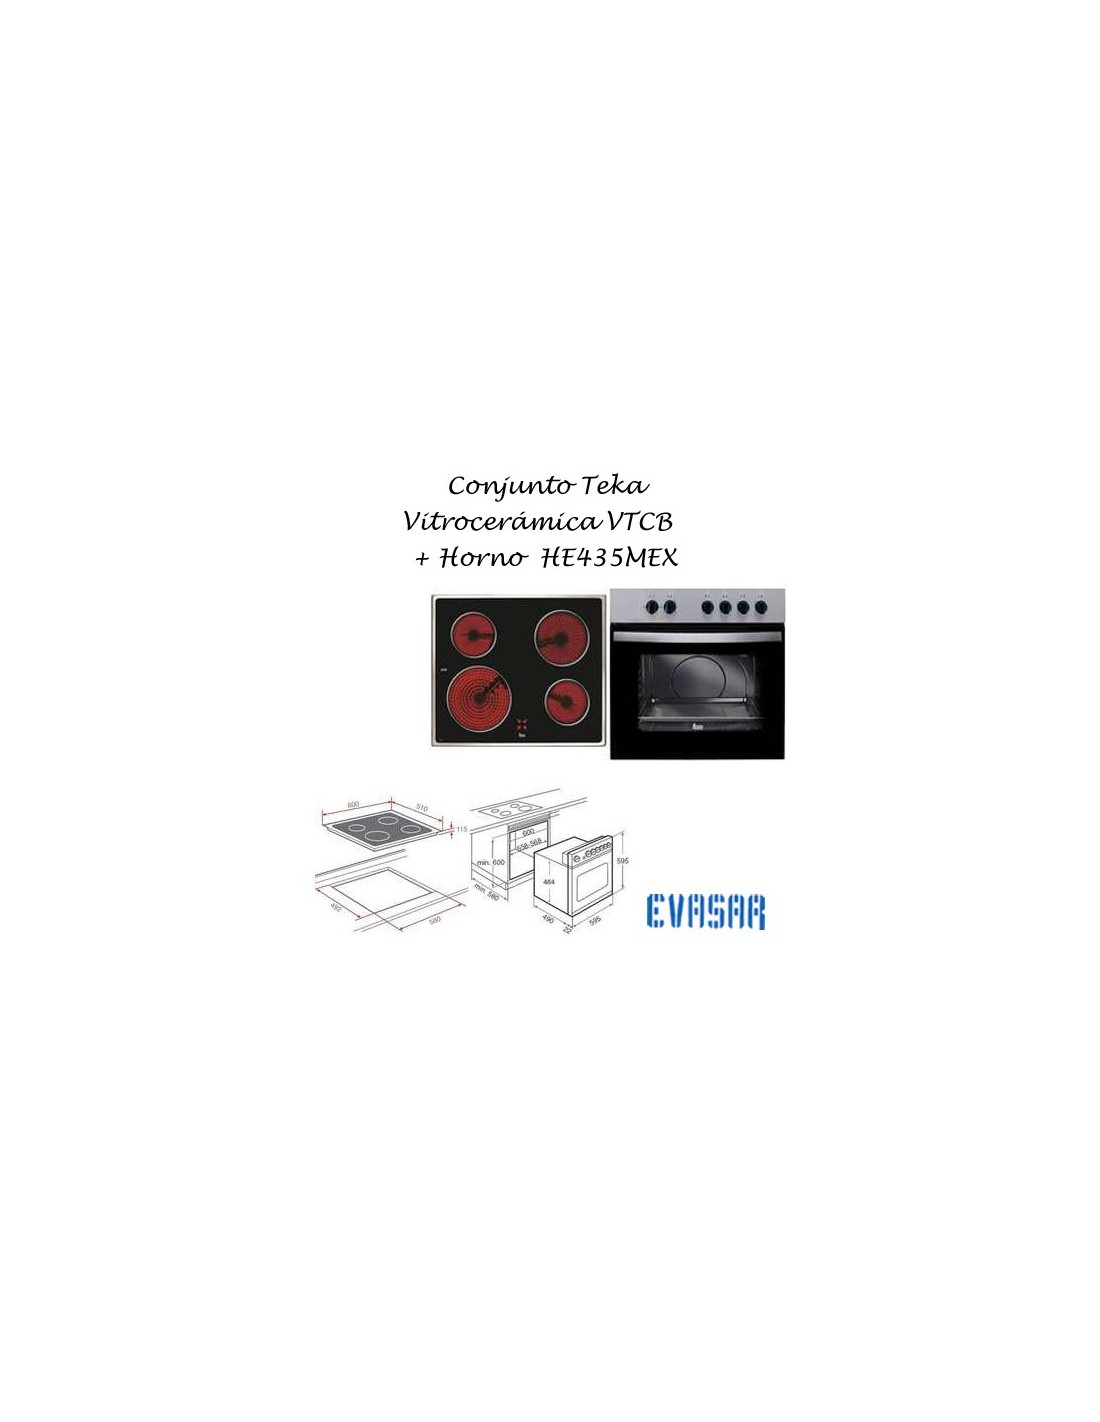 Conjunto de horno + vitro Teka - Electrodomésticos Elur